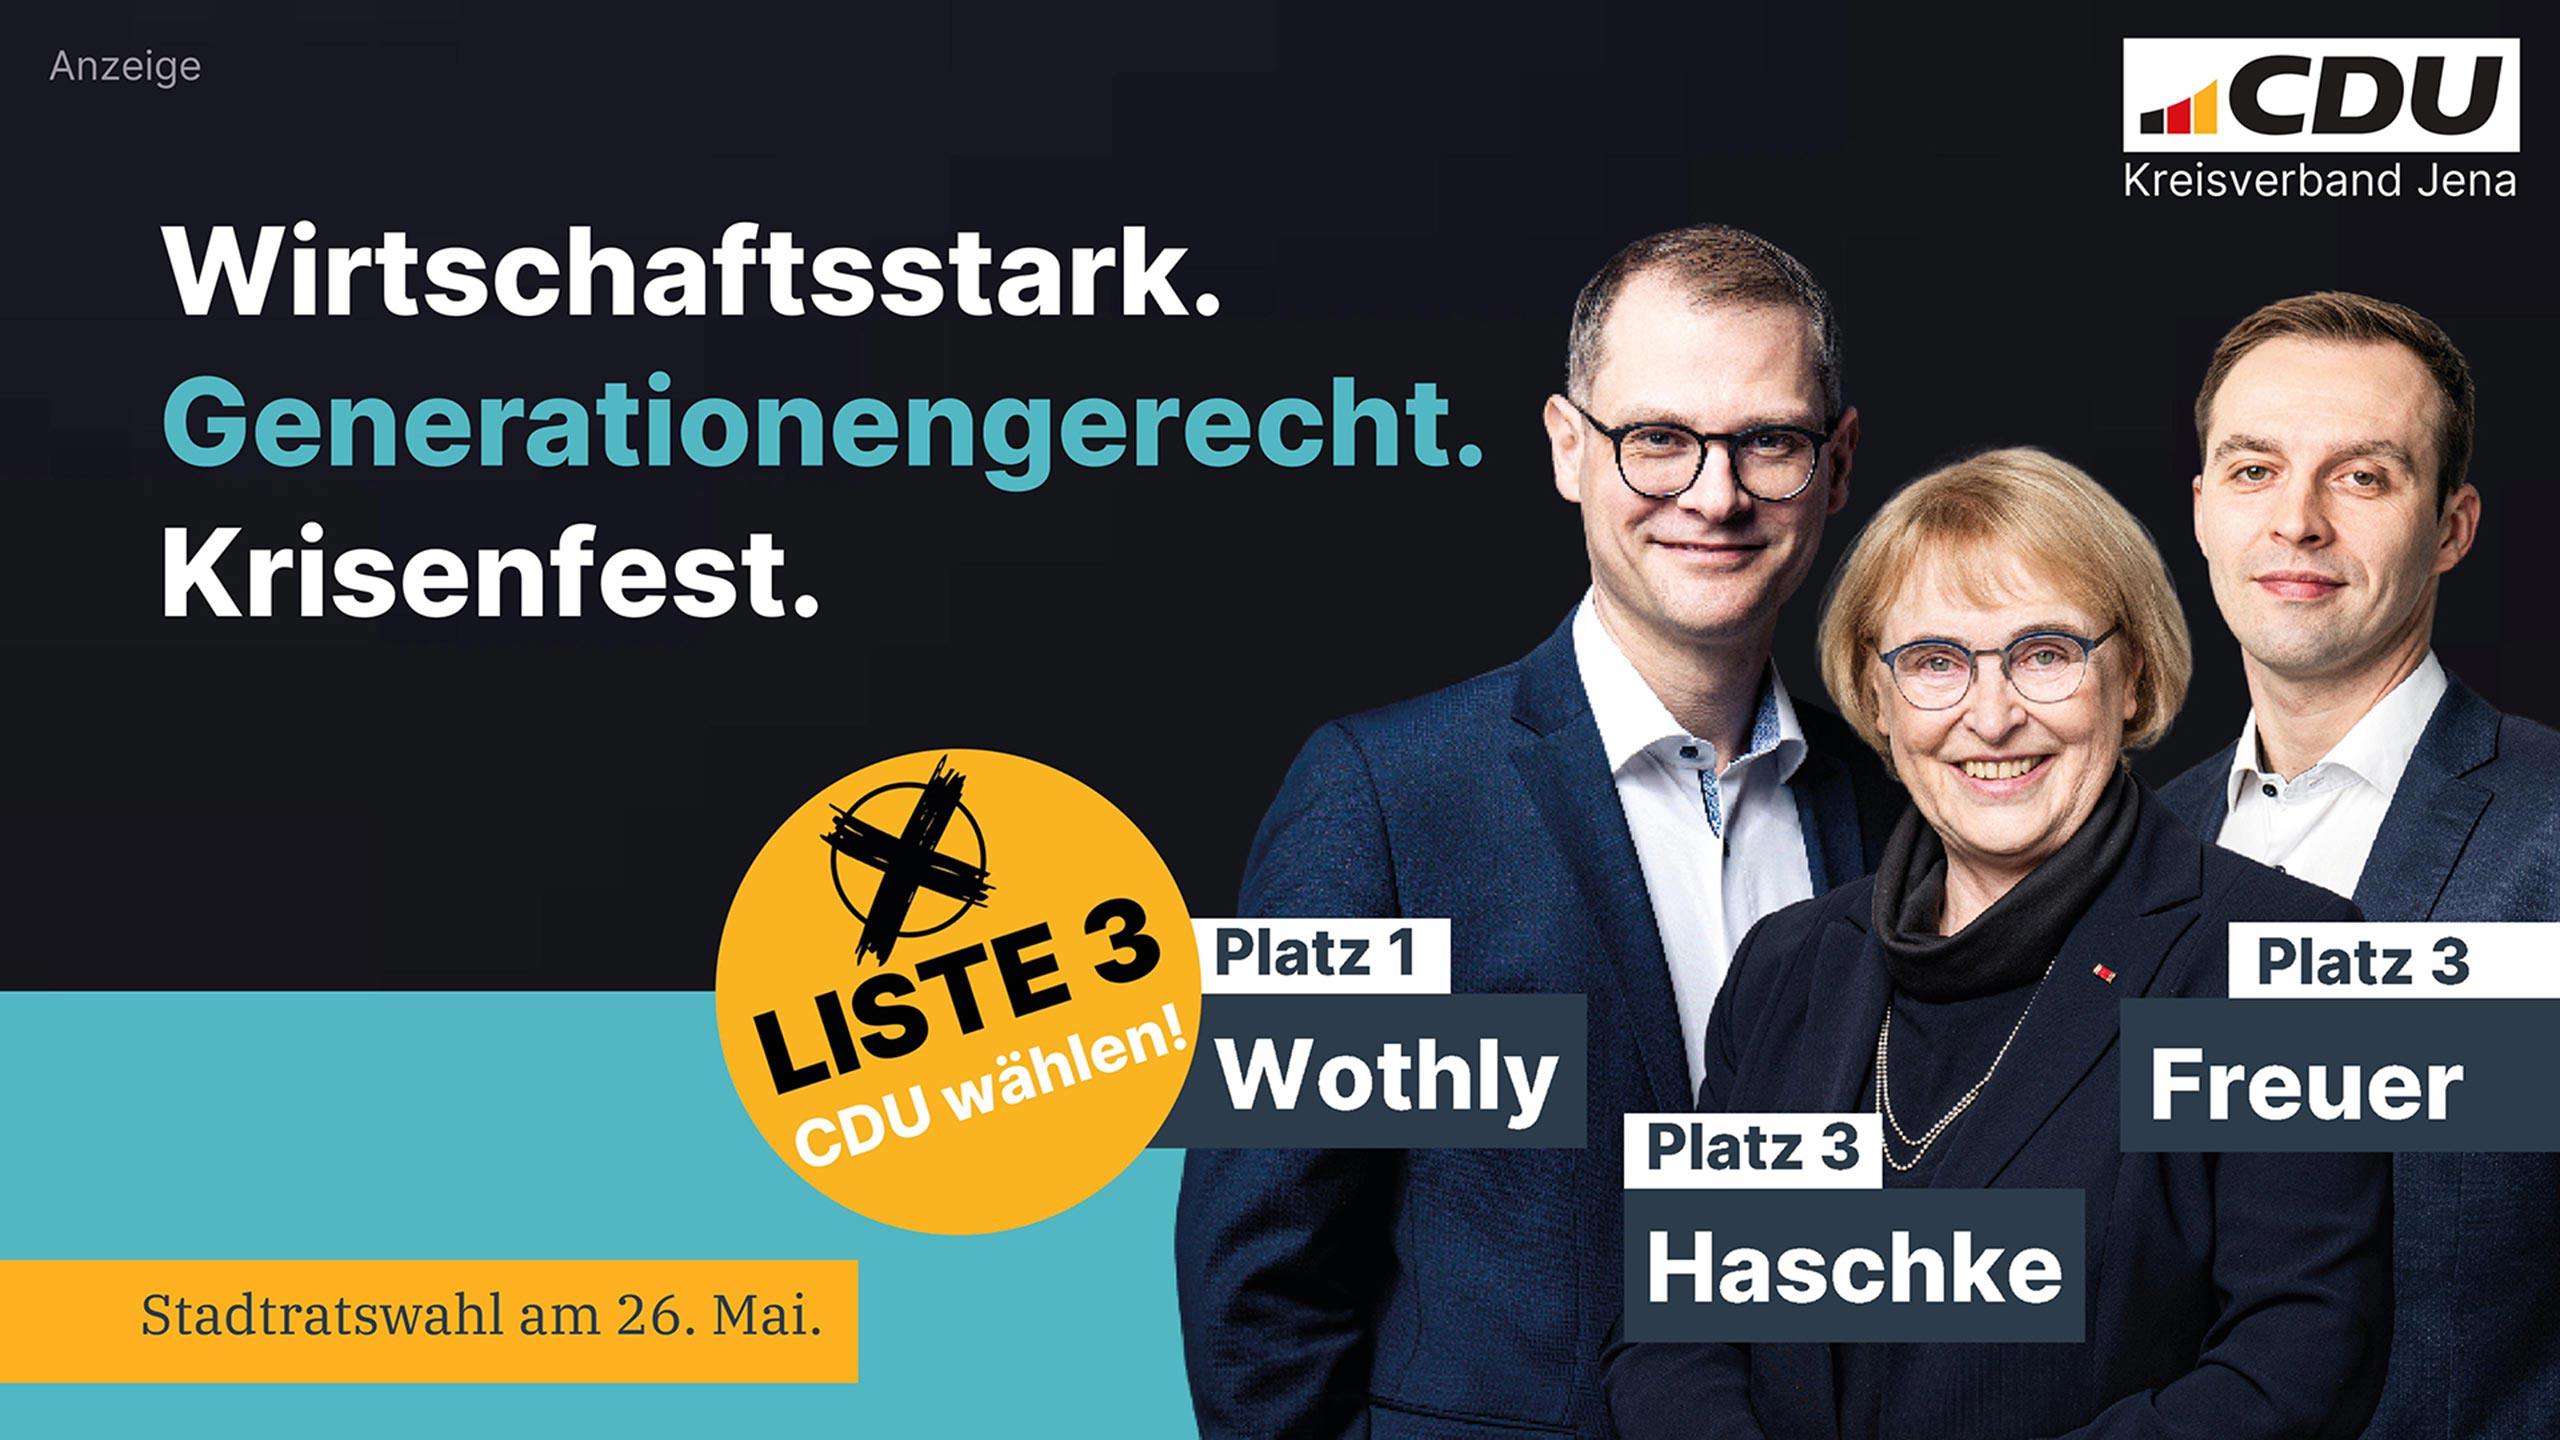 CDU Jena_Wahlwerbung_Wothly_Haschke_Freuer_640